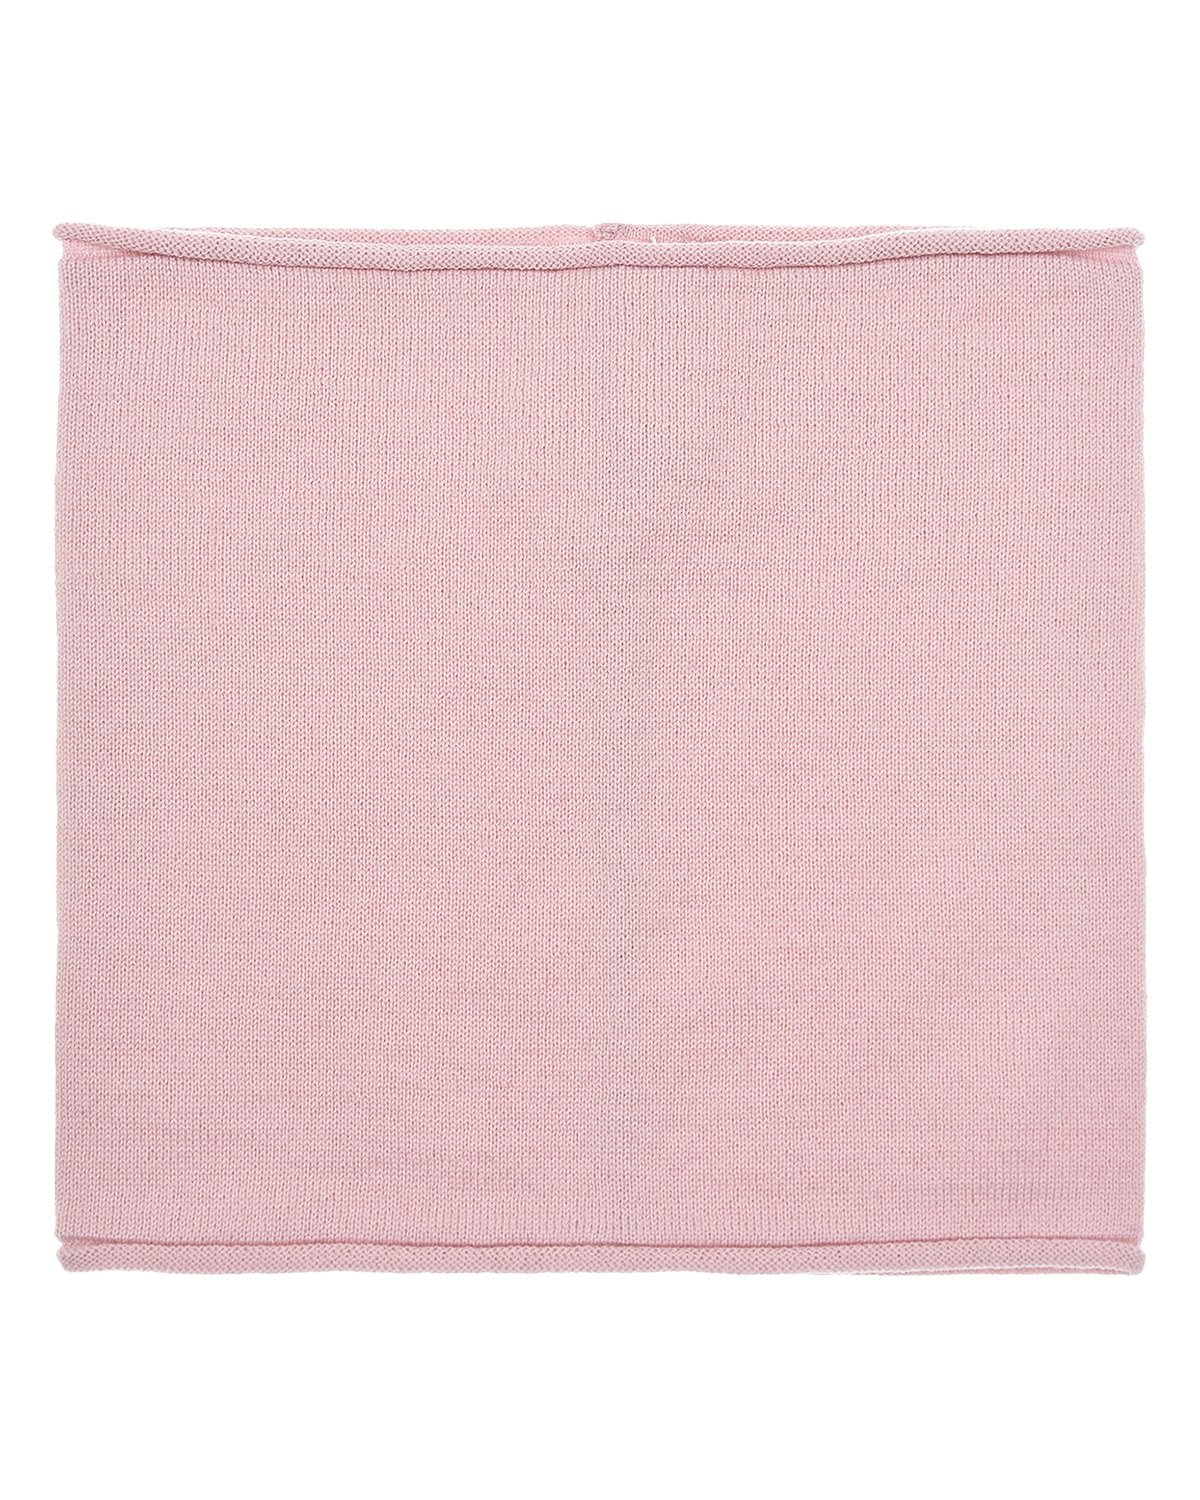 Розовый шарф-ворот, 26x24 см Catya детский, размер unica - фото 2